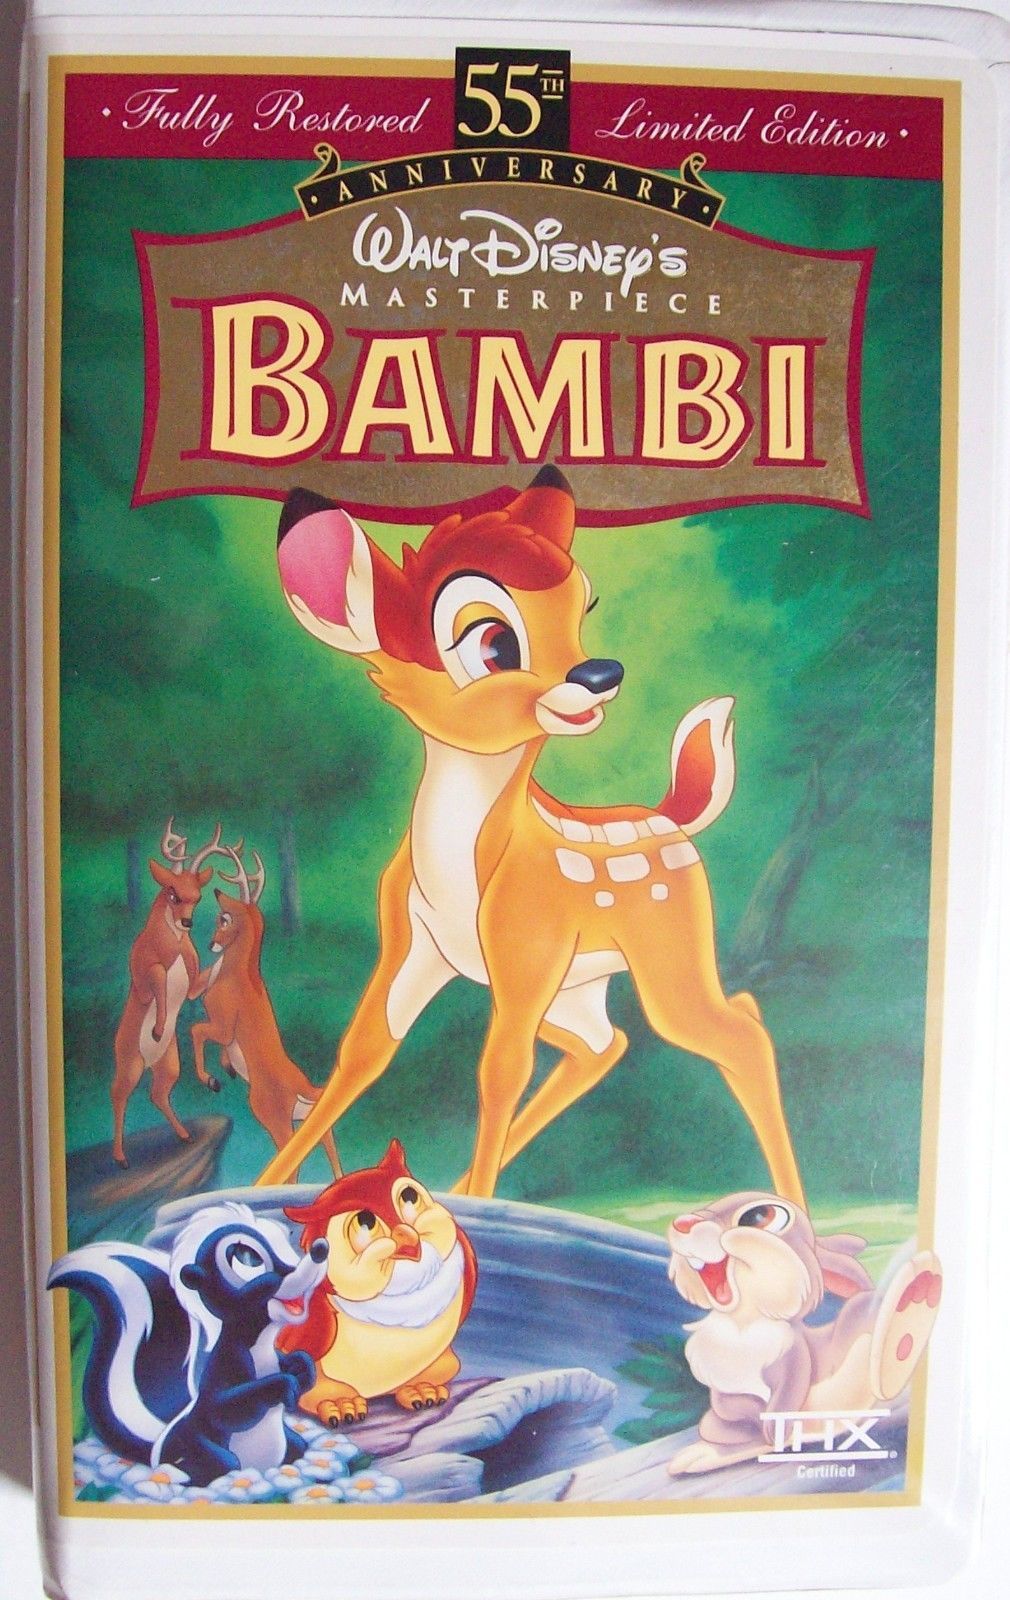 Bambi Disney Vhs Th Anniversary Limited Edition Ebay My XXX Hot Girl